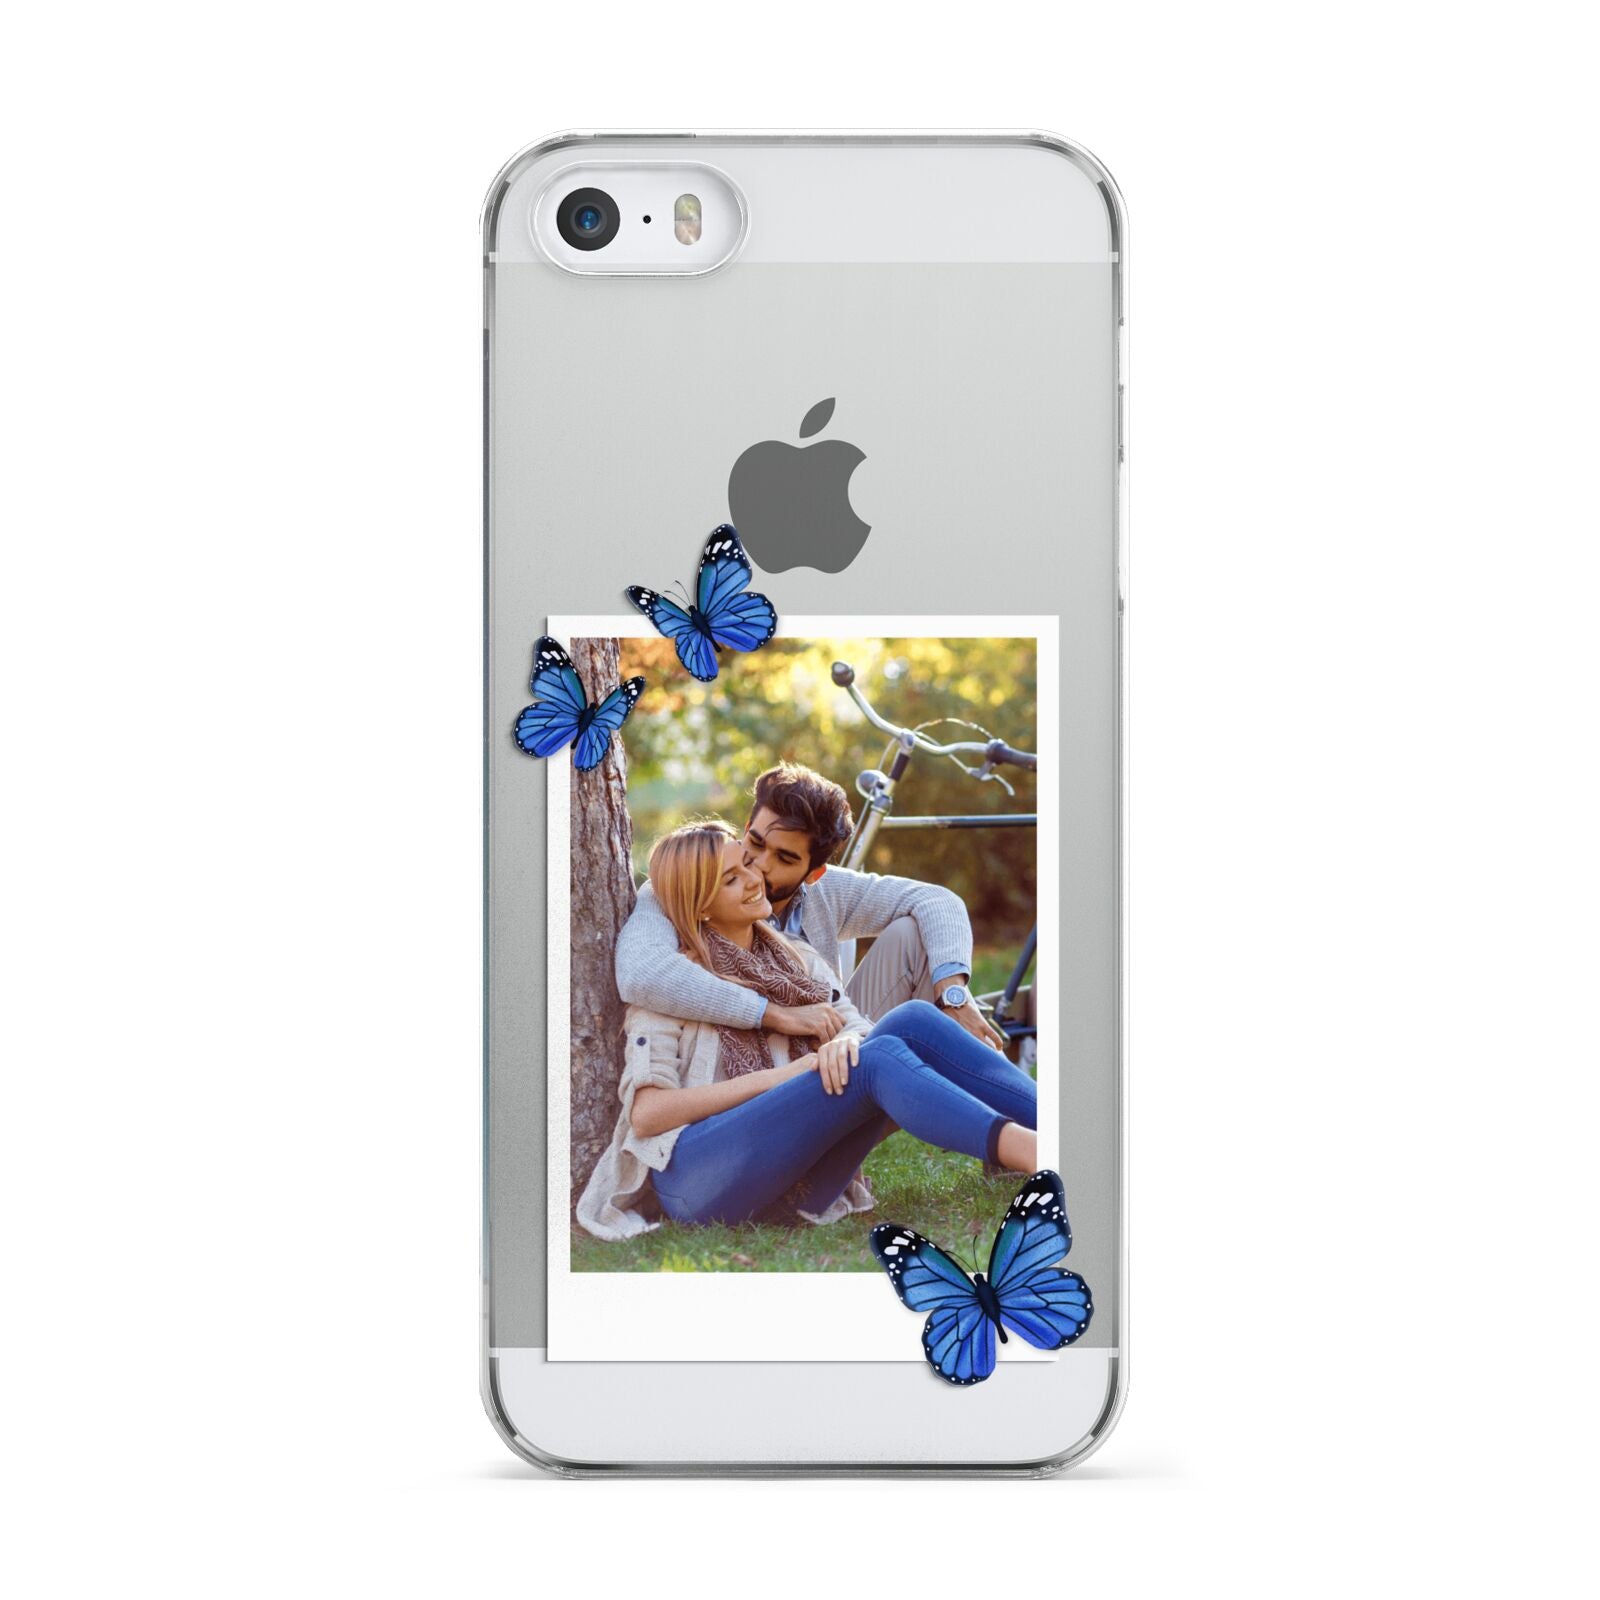 Polaroid Photo Apple iPhone 5 Case